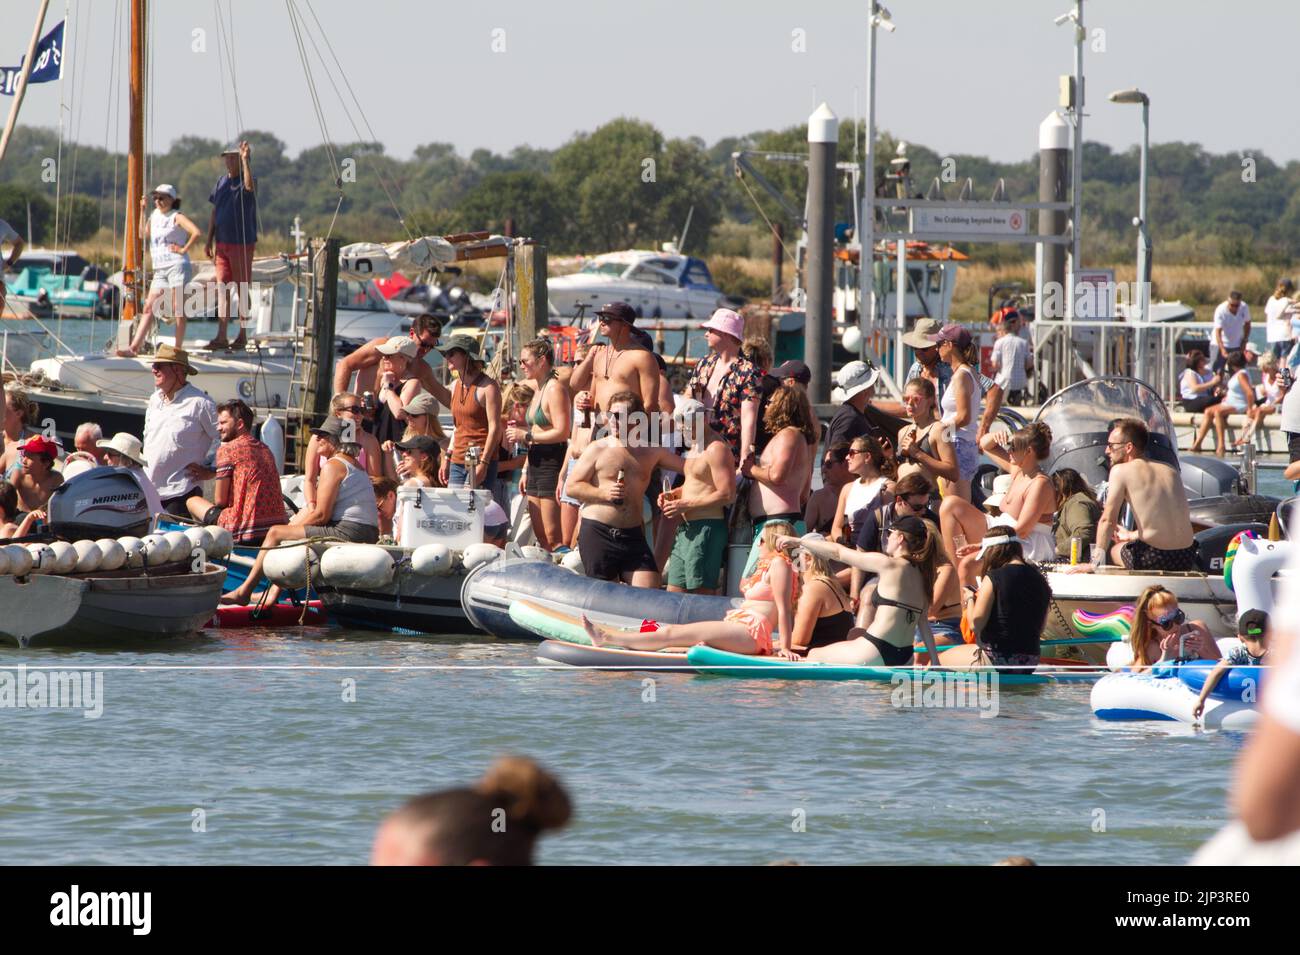 West Mersea Town Regatta on Mersea Island in Essex. Crowds enjoying the sunshine on regatta day. Stock Photo